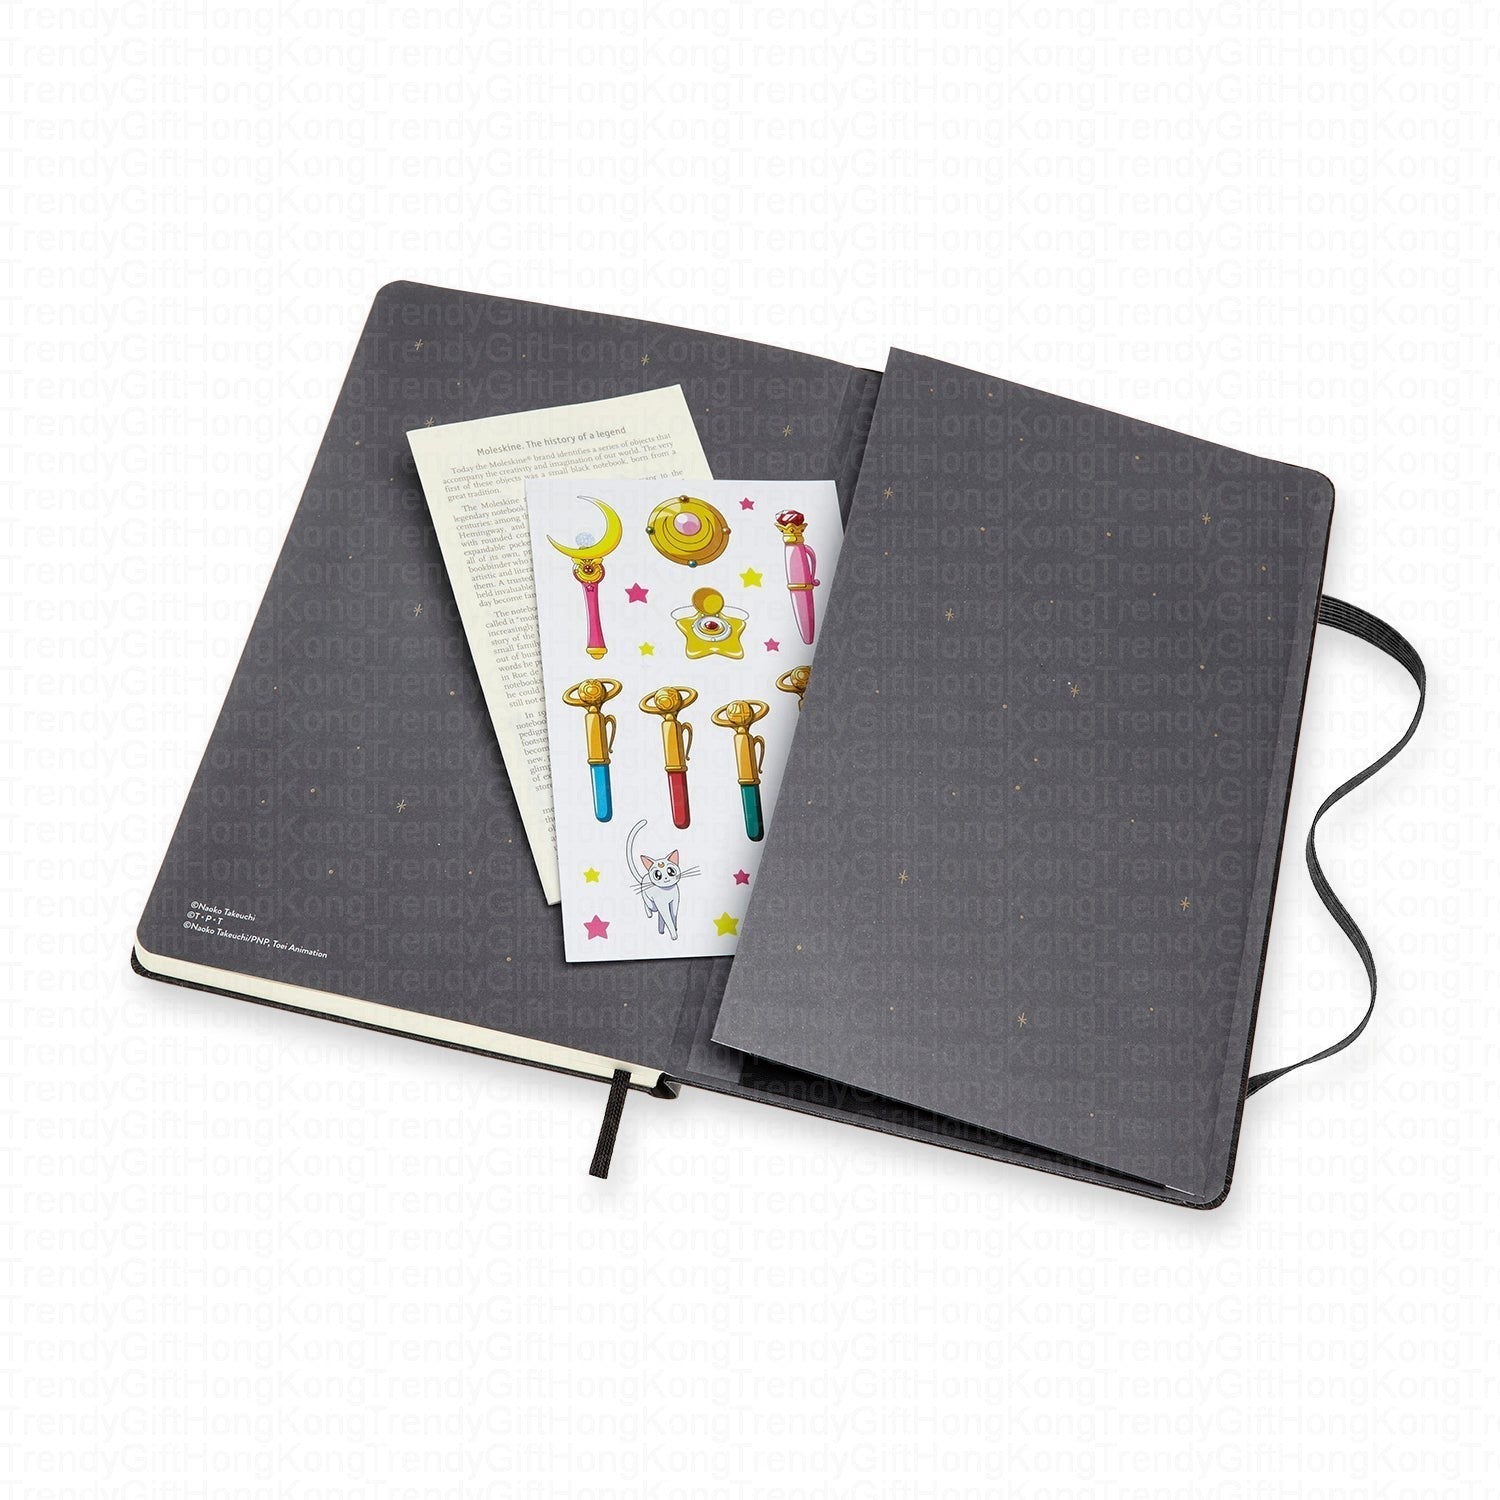 Moleskine Sailor Moon Limited Edition Large Ruled Notebook - 13x21cm trendygifthk